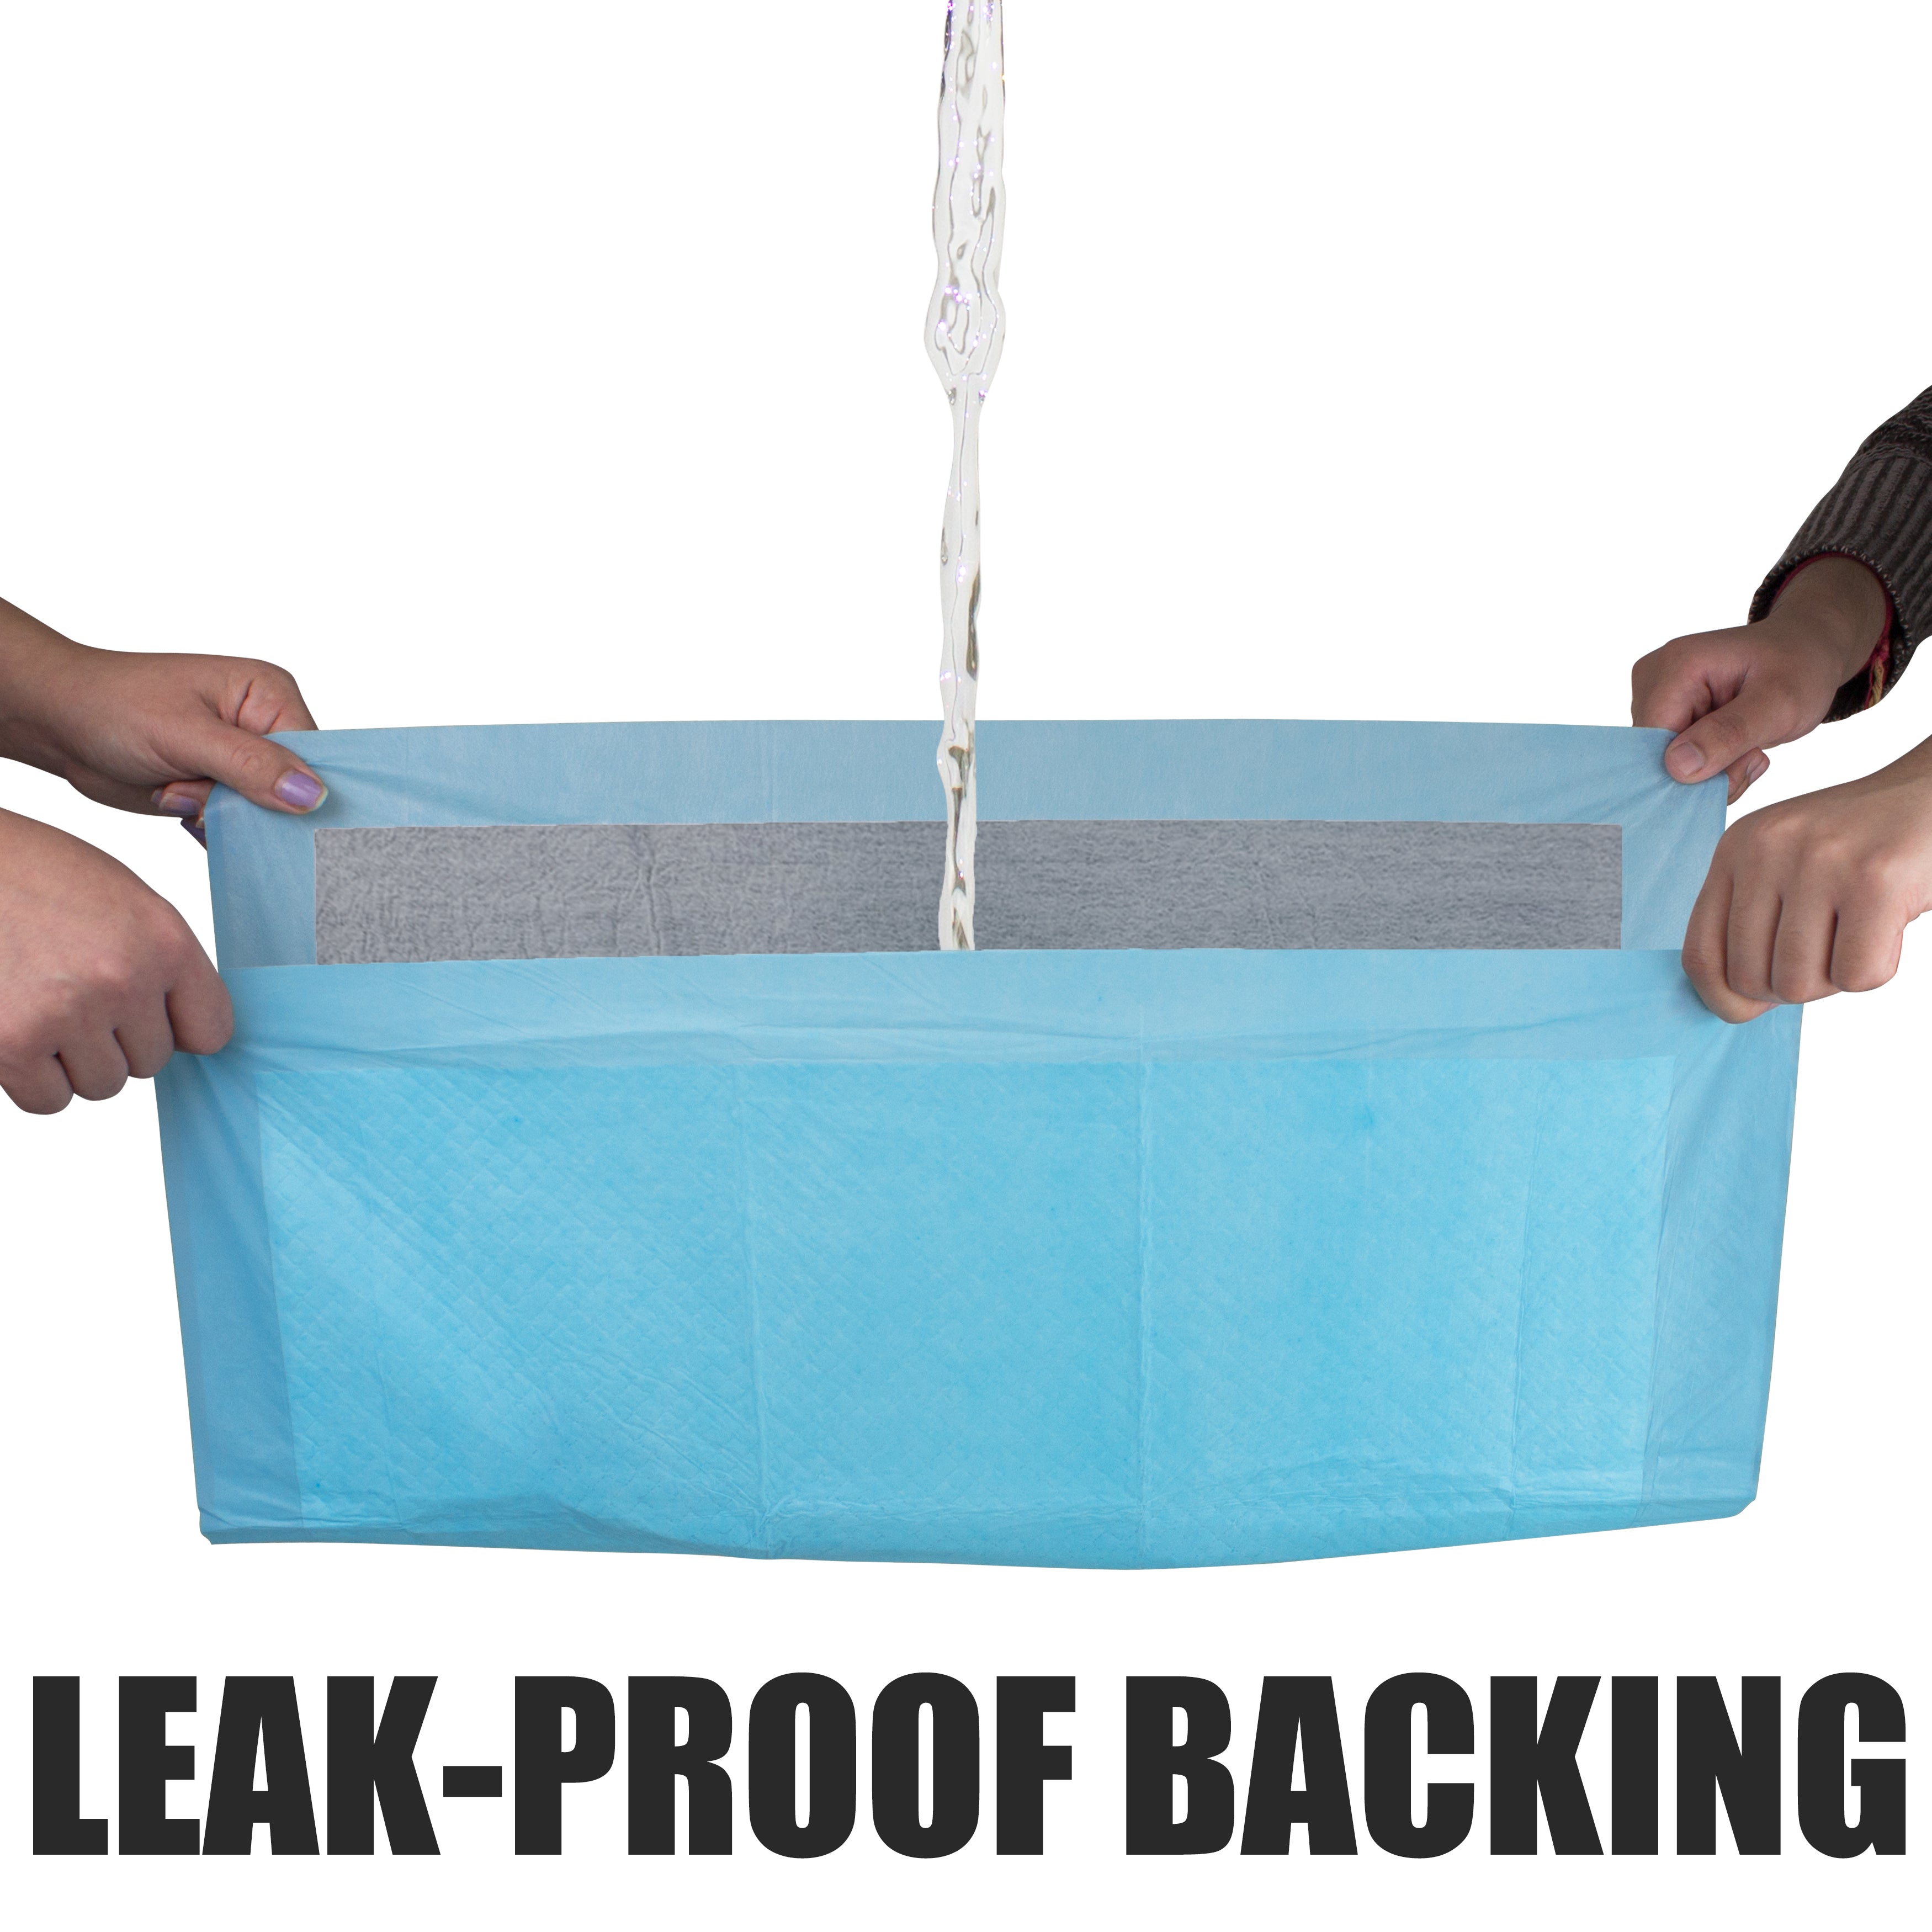 Leak Proof Backing